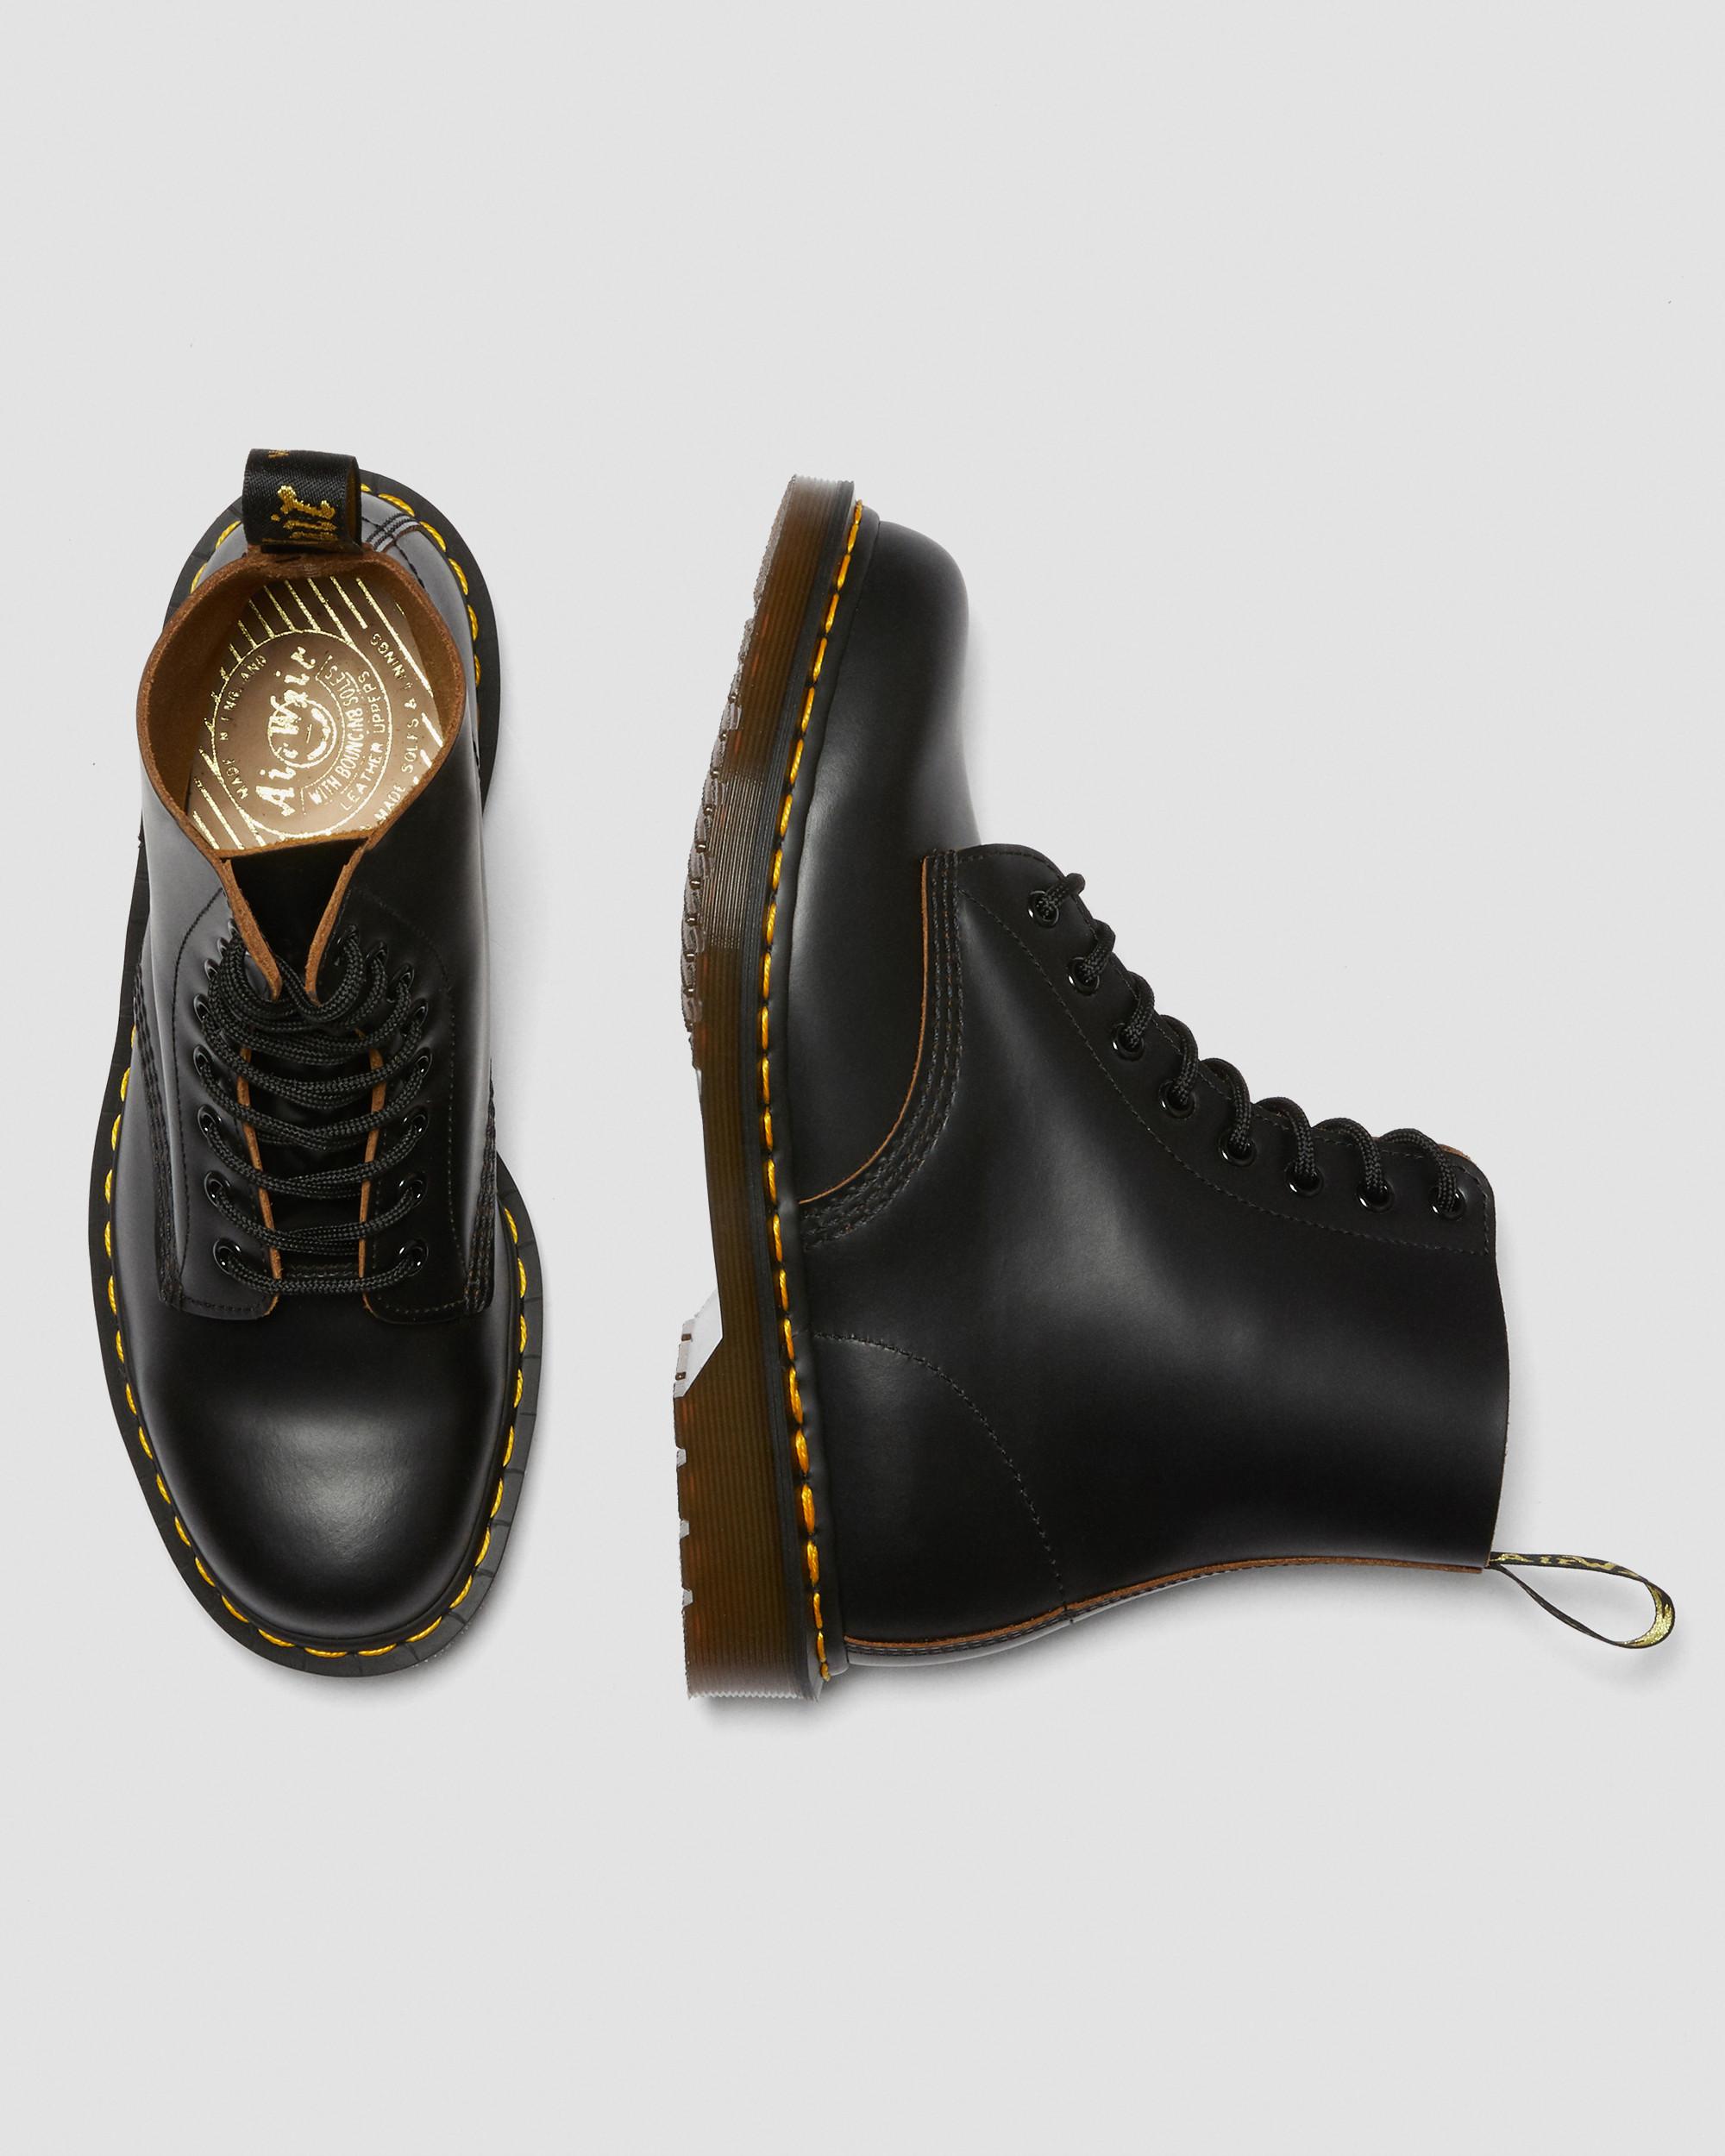 Vintage 1460 Quilon Leather Ankle Boots in Black | Dr. Martens